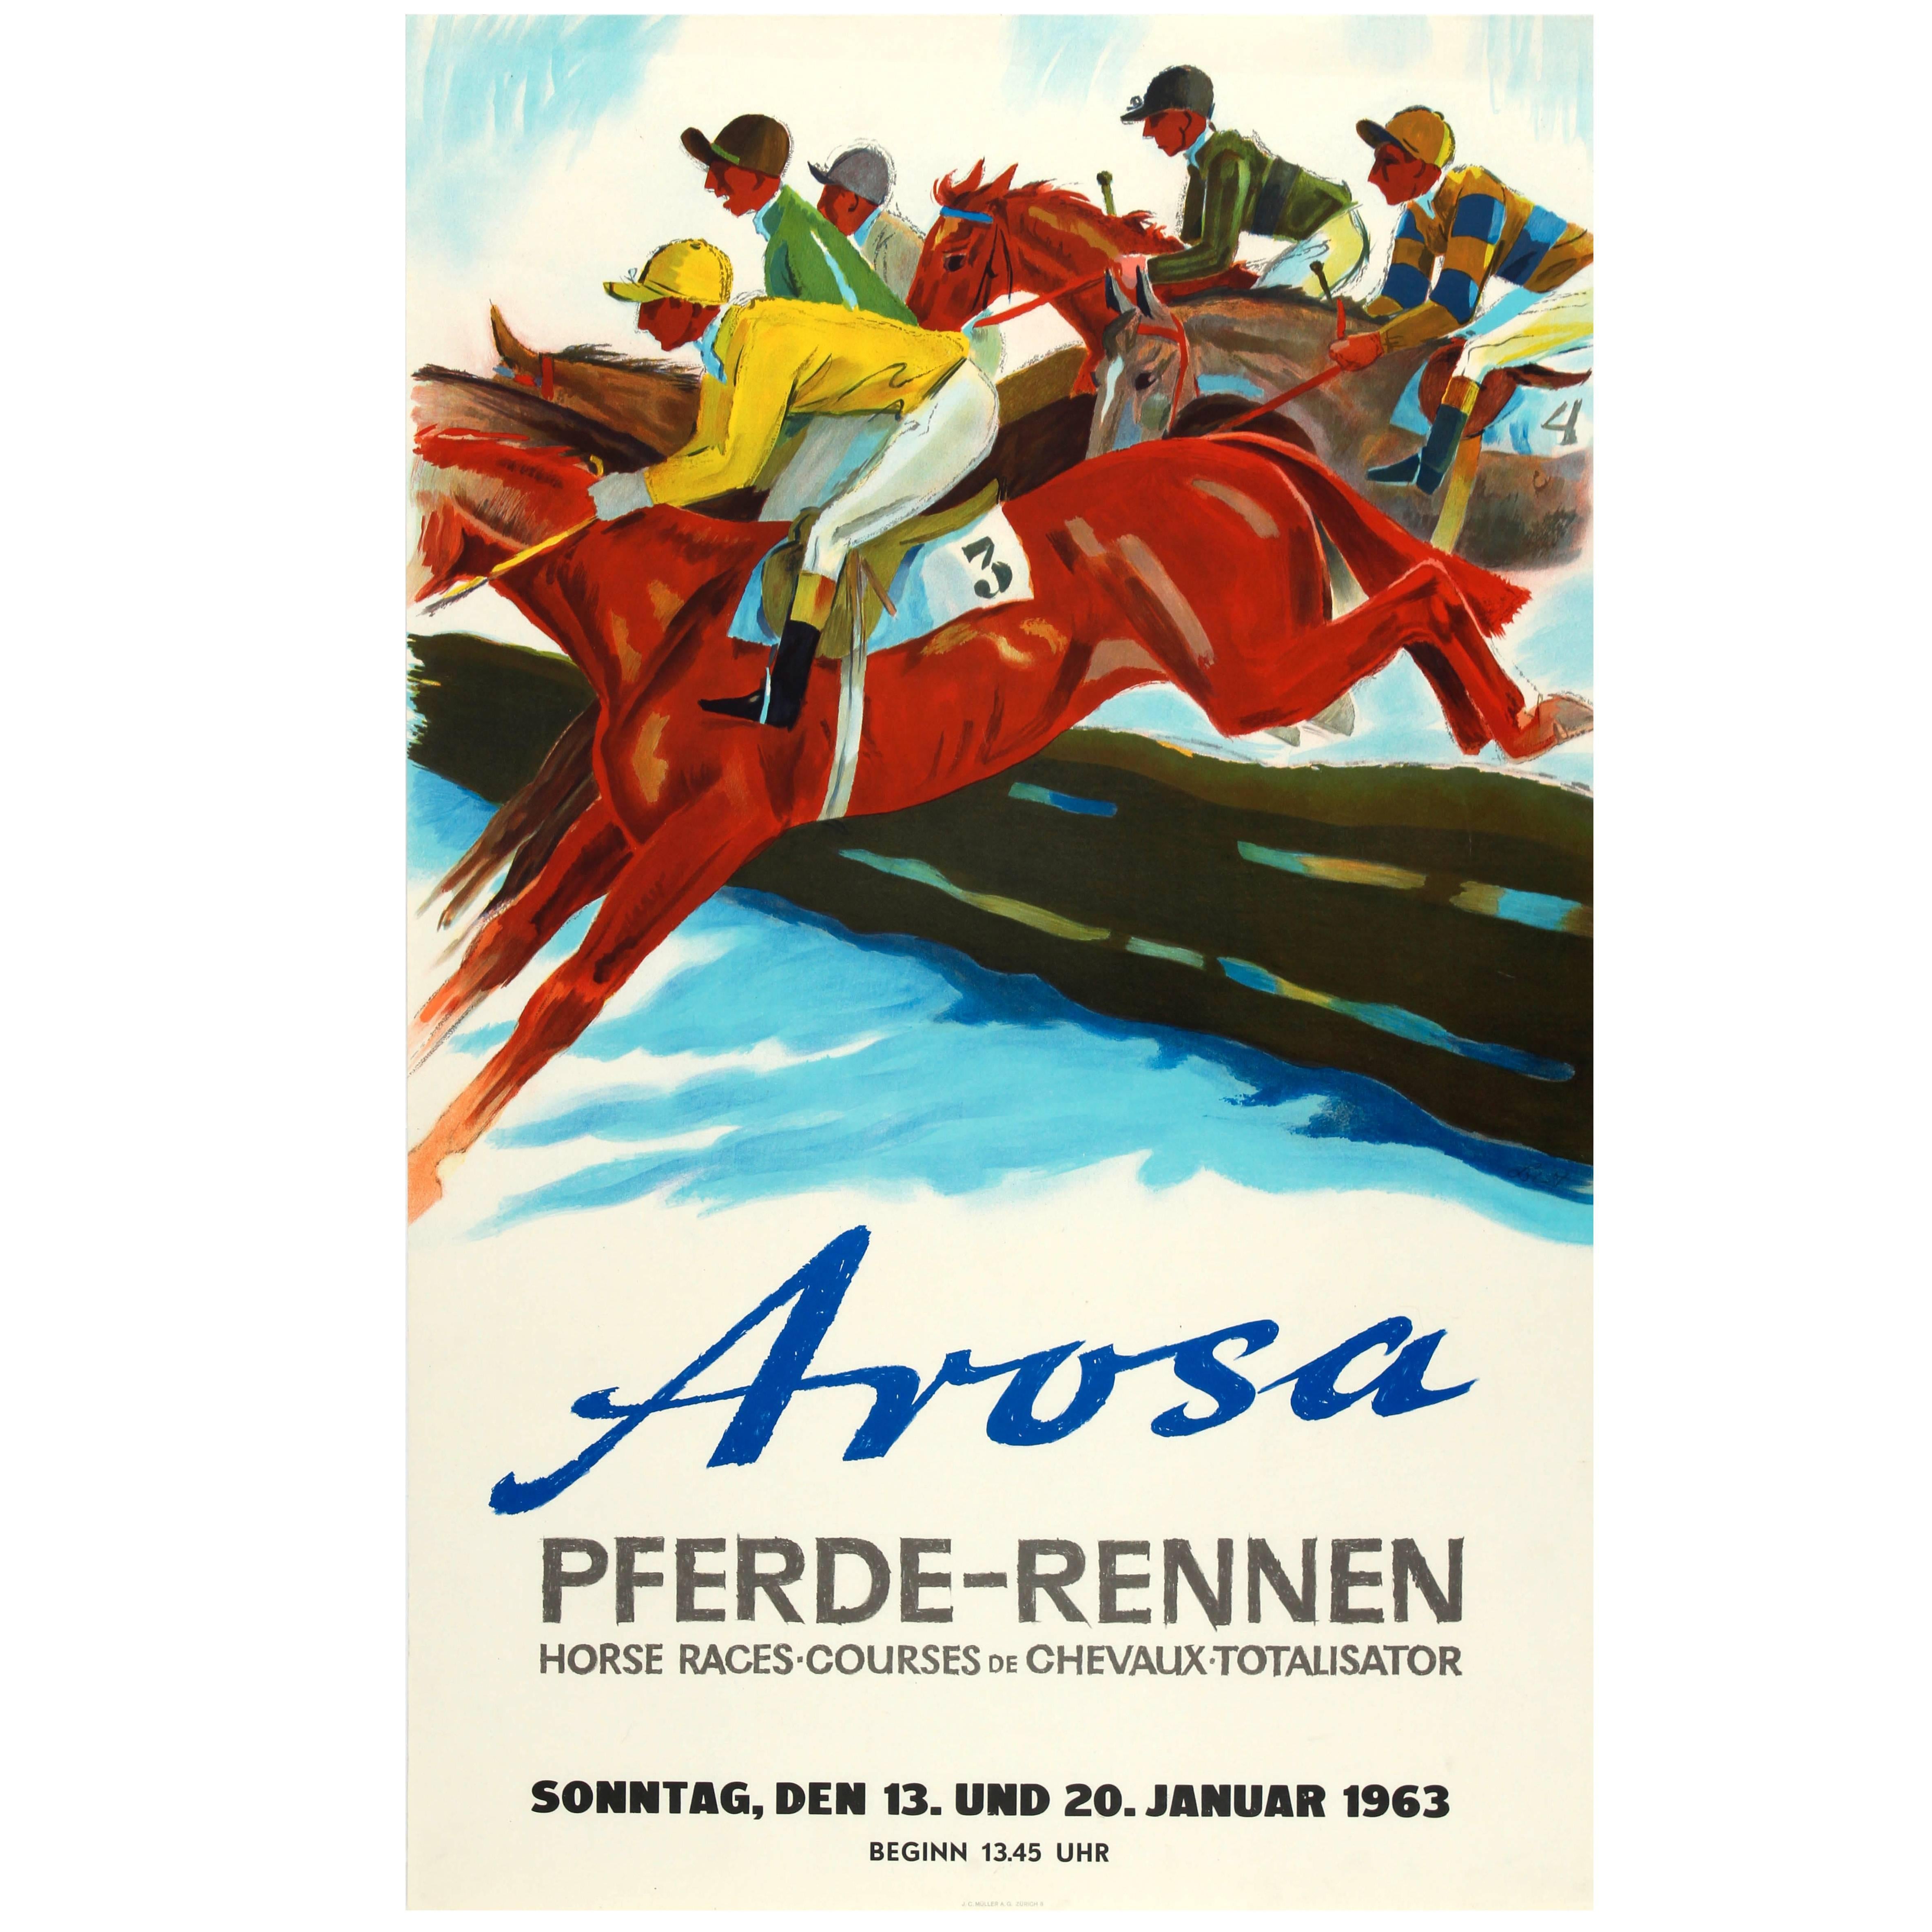 Original Vintage Steeplechase Horse Race Poster for the 1963 Arosa Pferde-Rennen For Sale